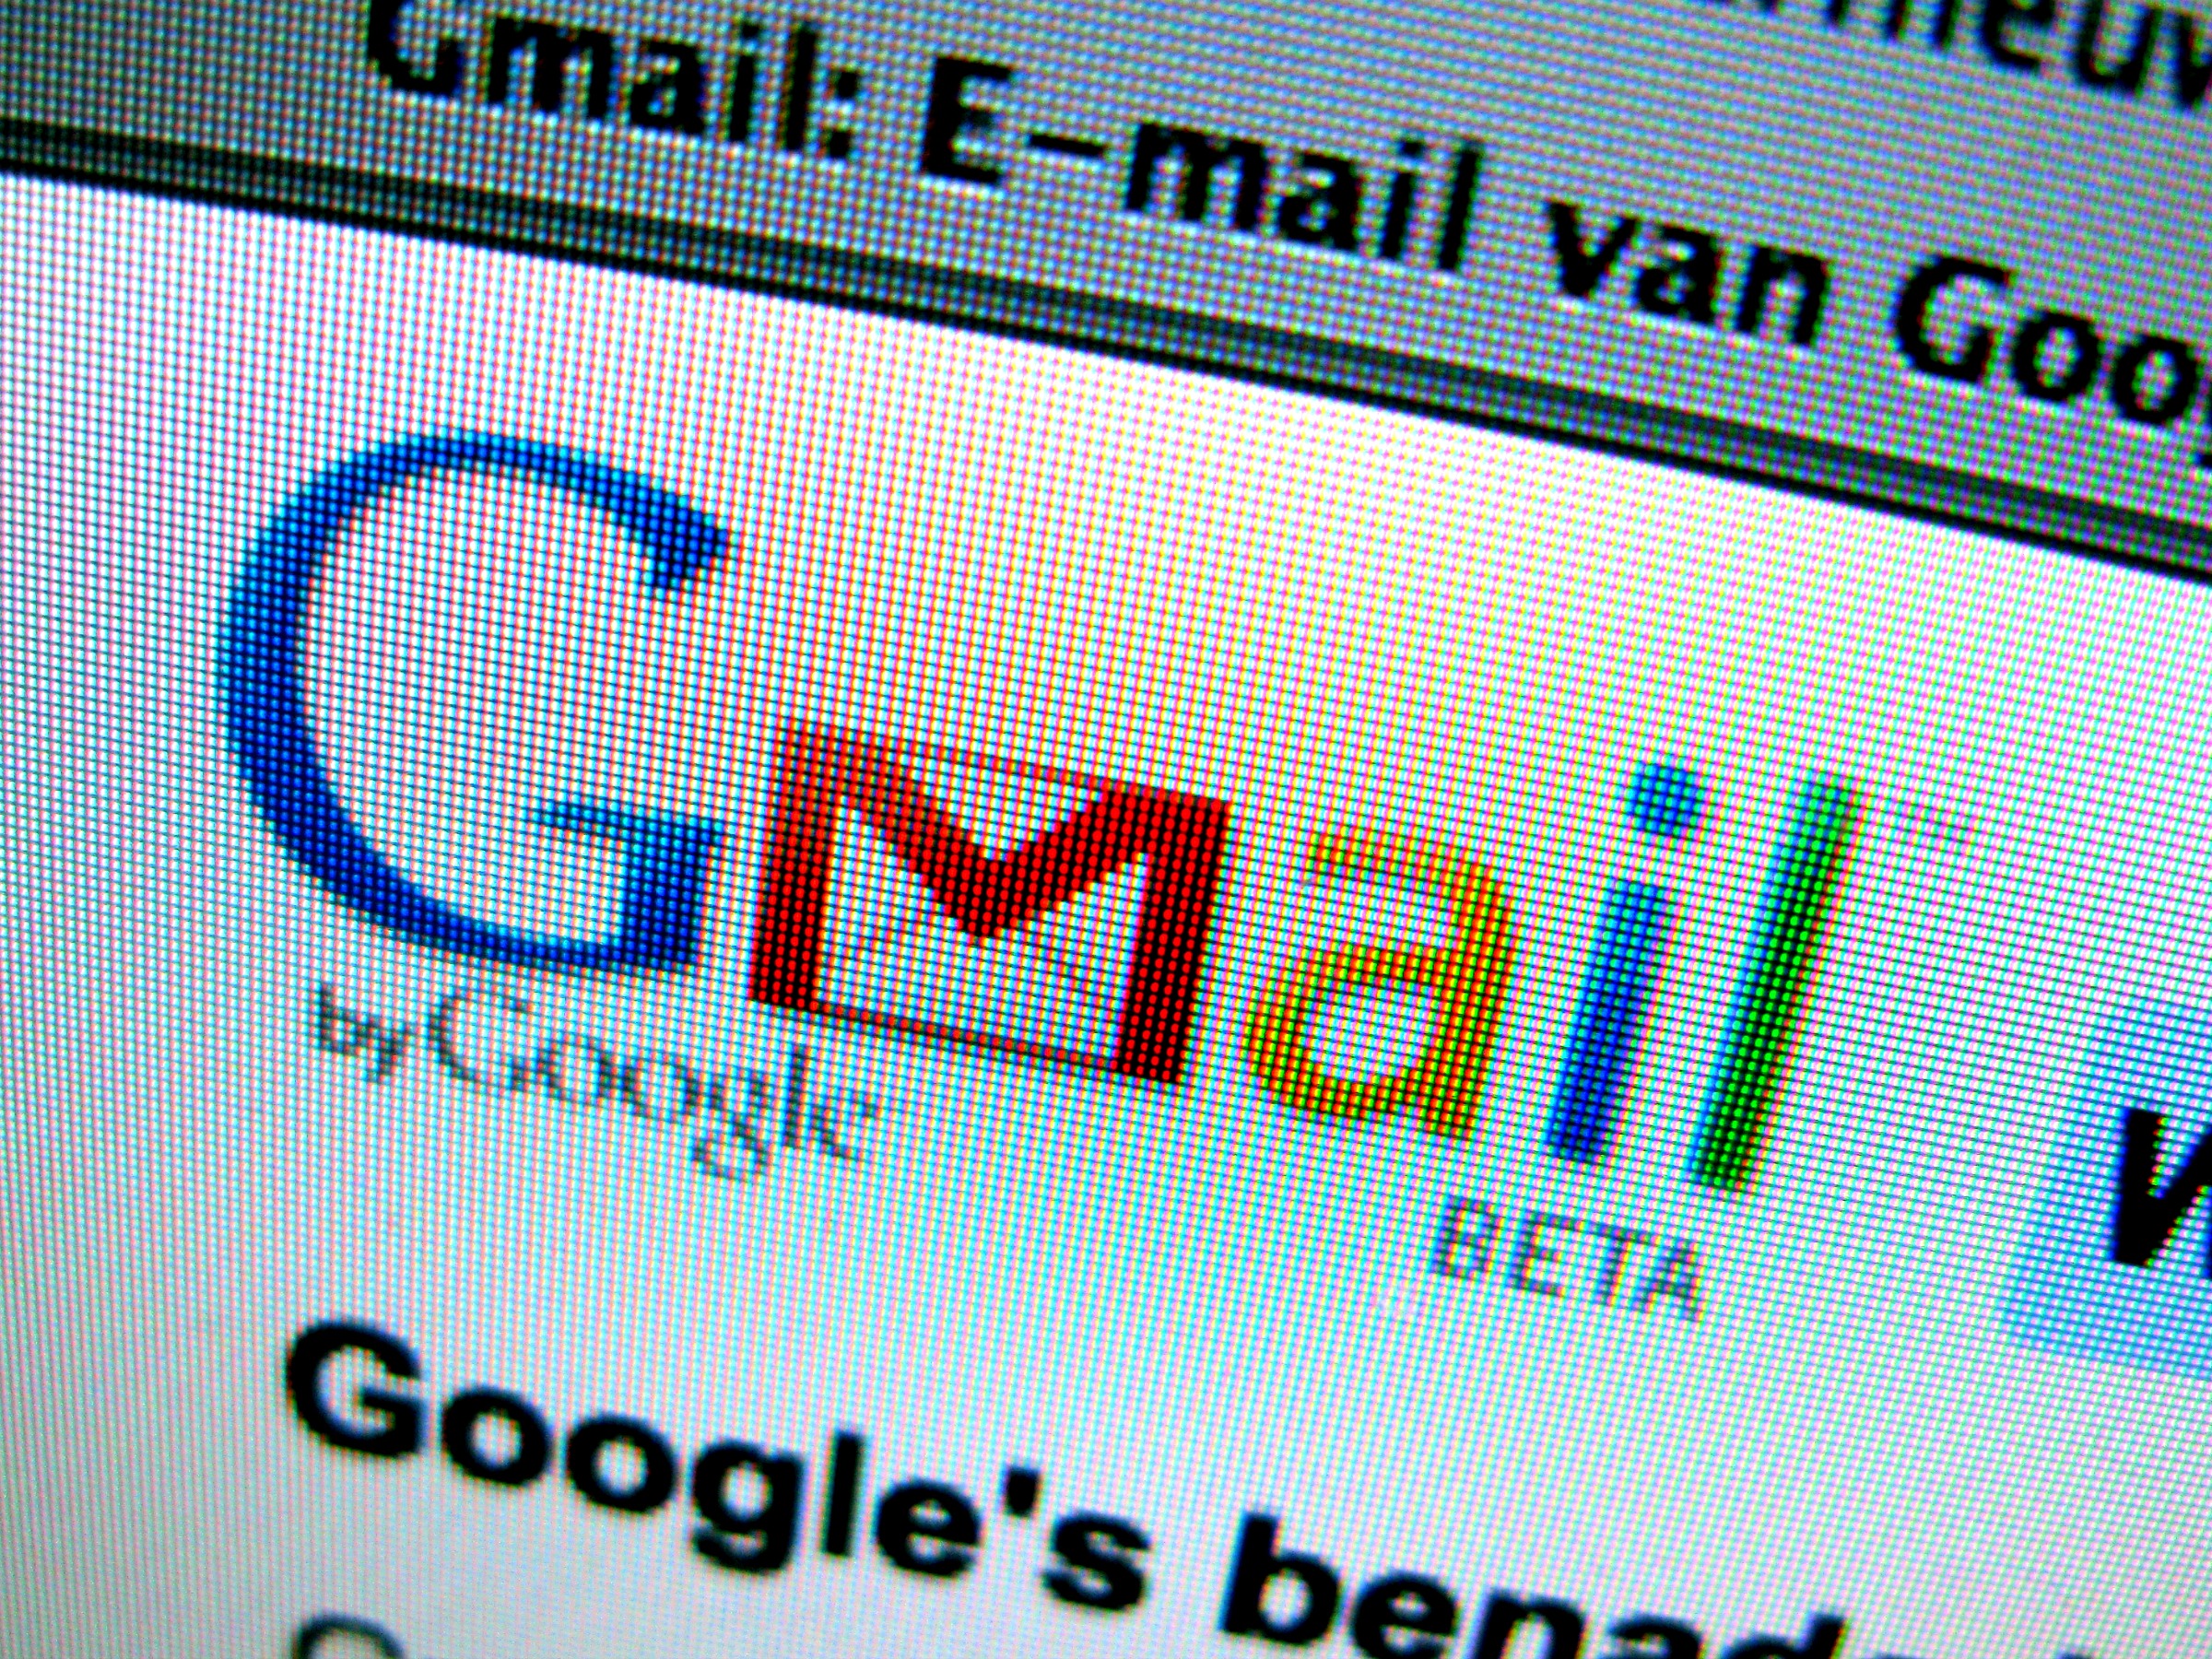 gmail google e-mail bijlage 50 mb